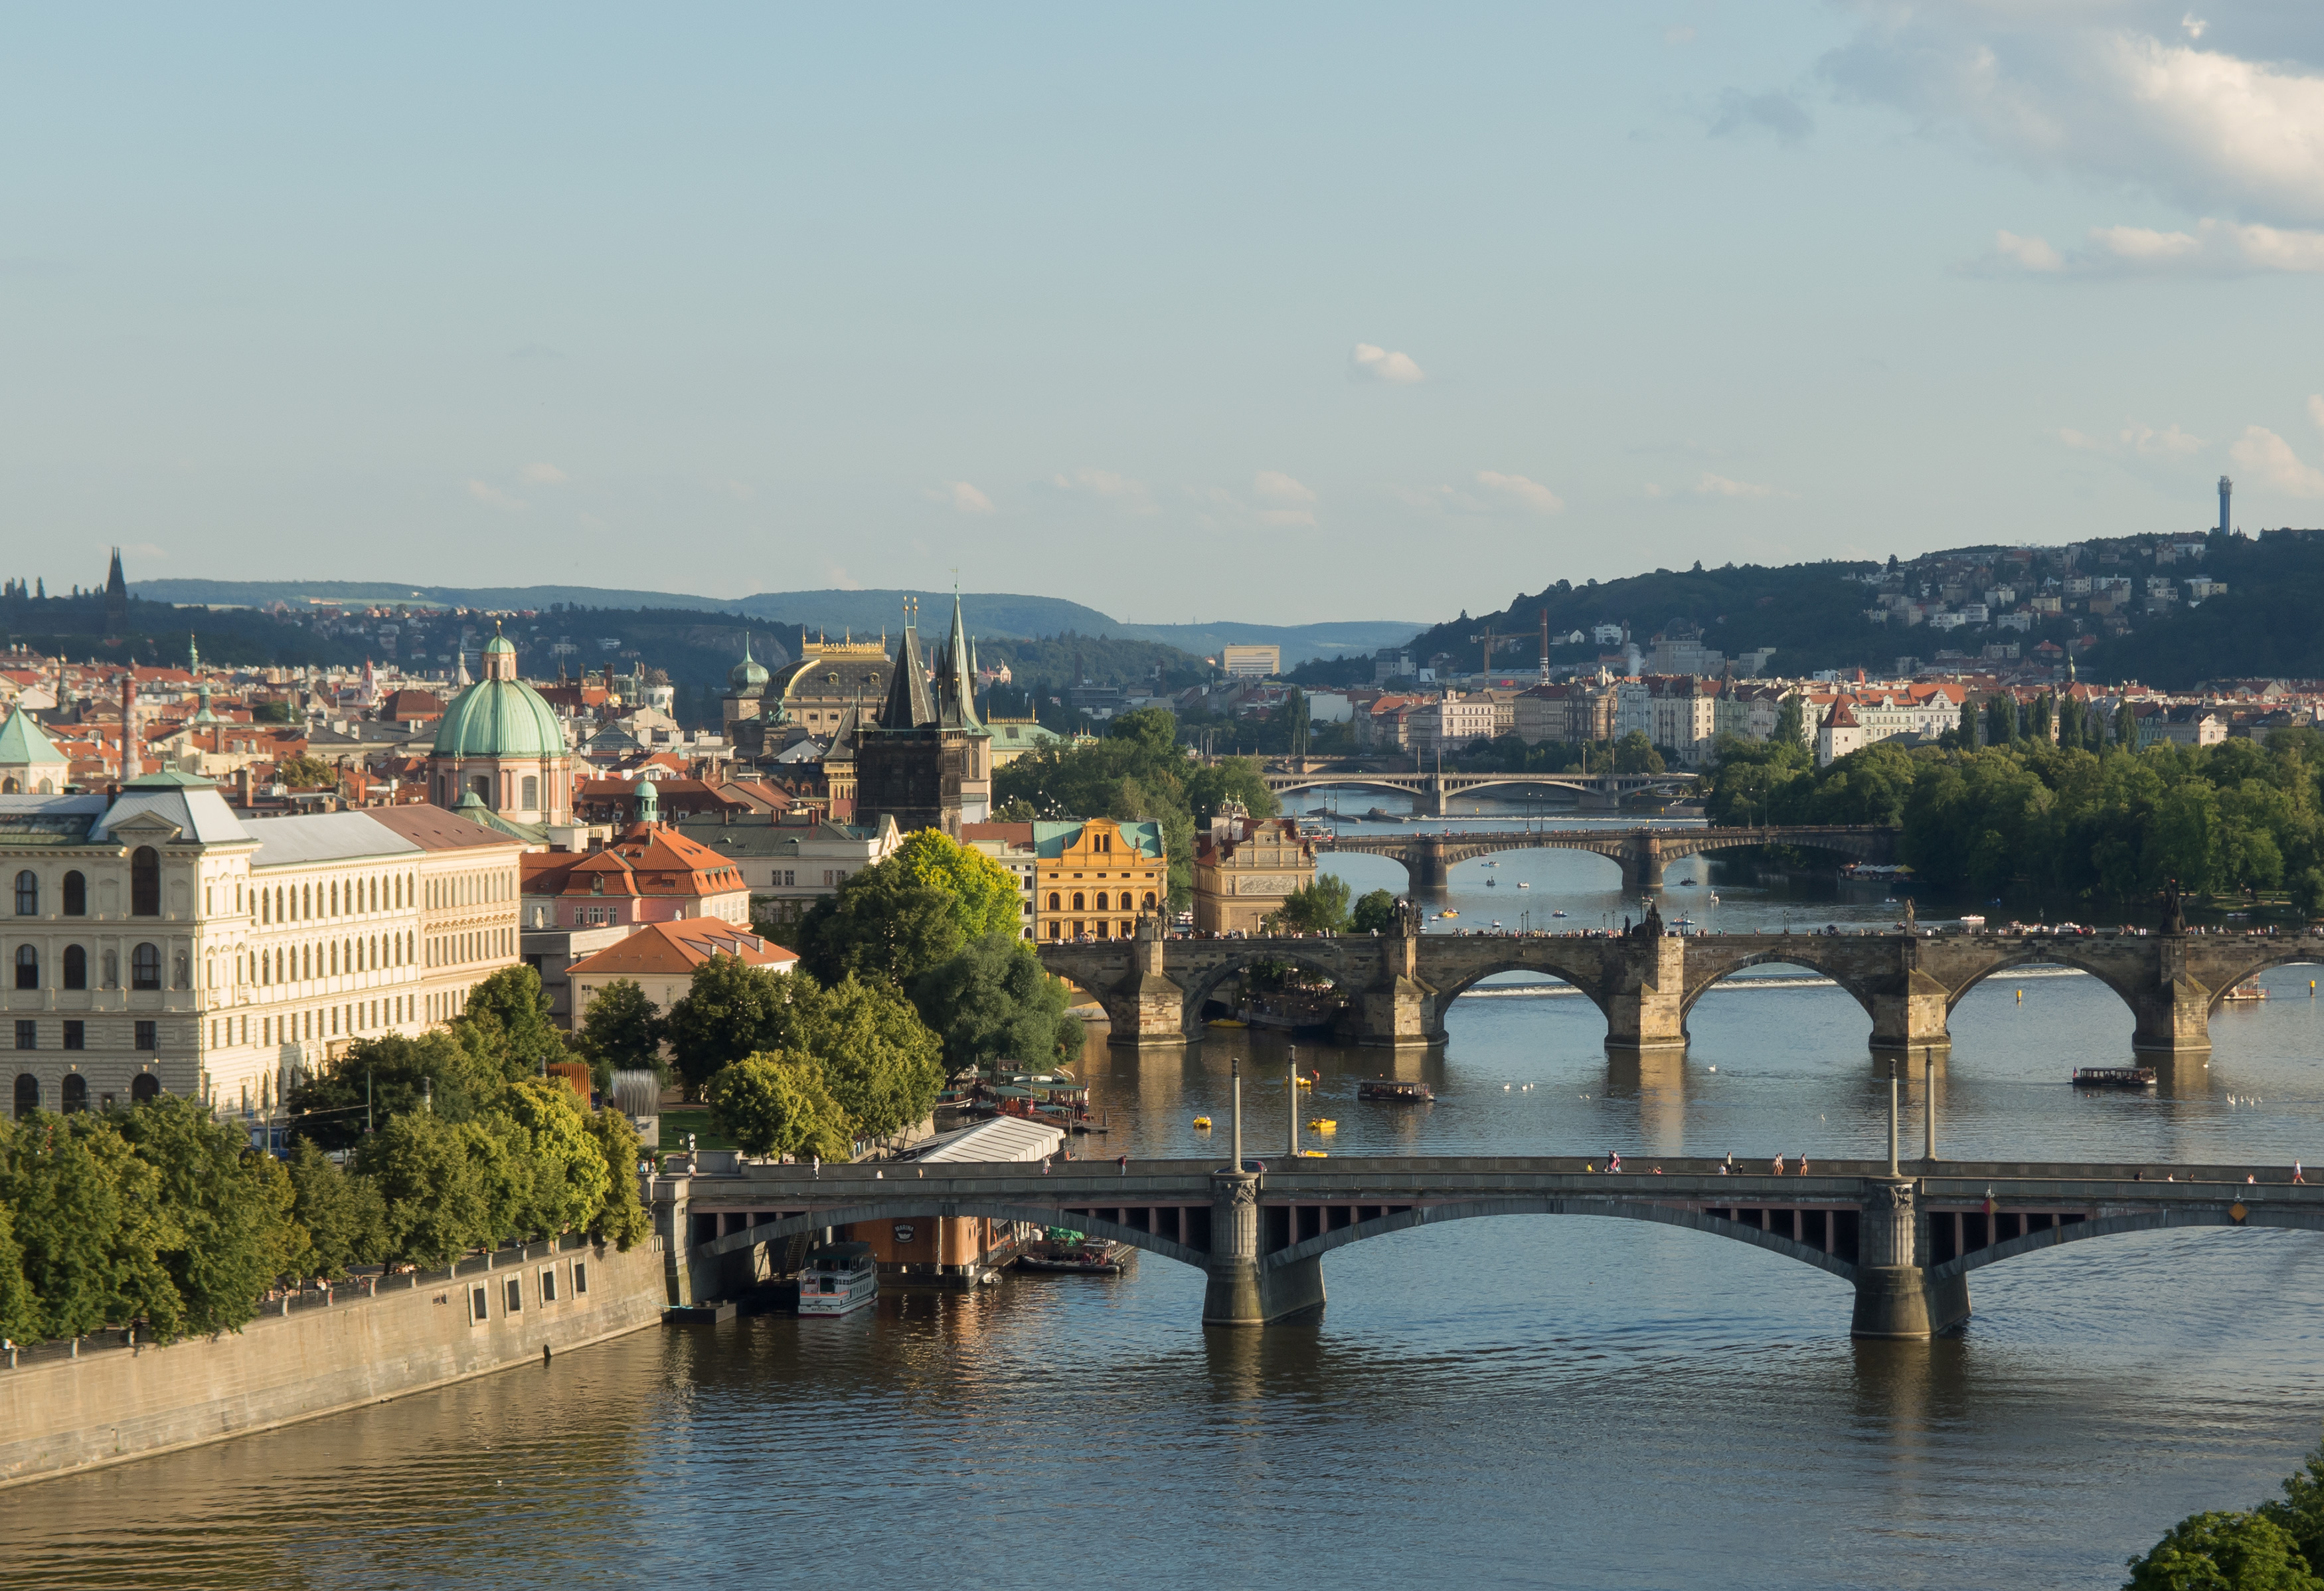 Free Image: Prague Bridges | Libreshot Public Domain Photos